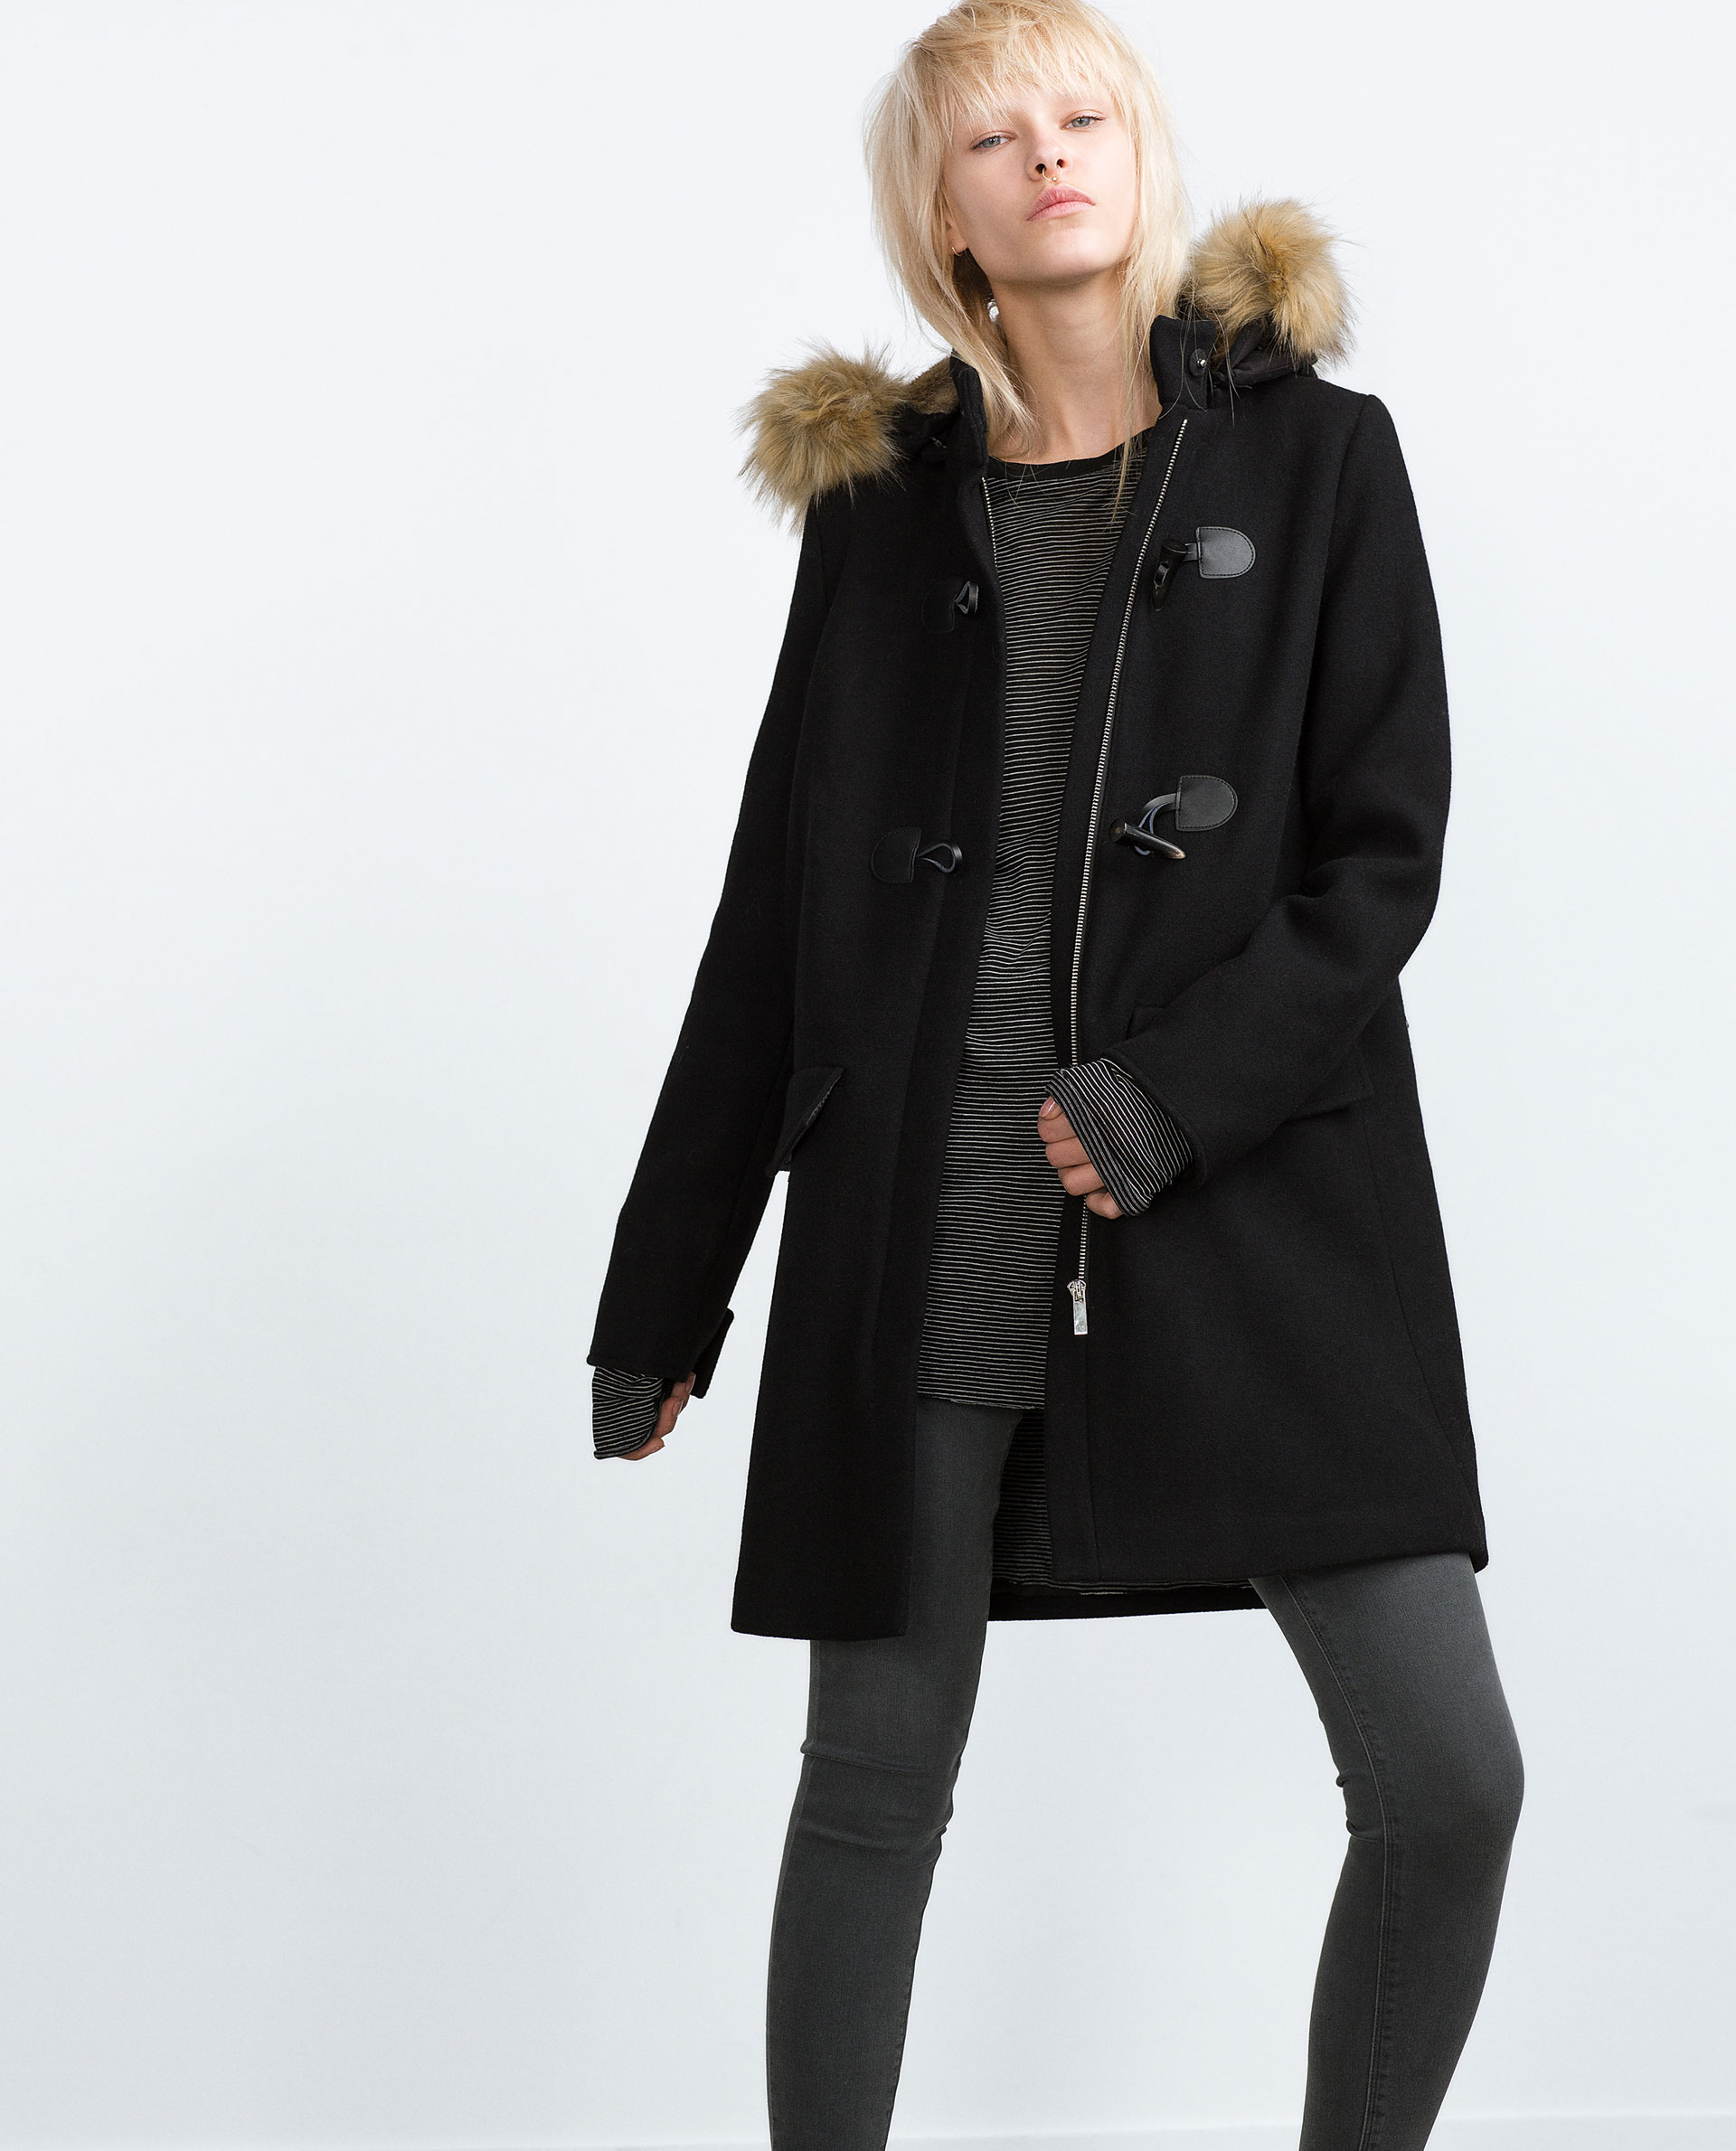 Black Duffle Coat With Fur Hood - Coat Nj